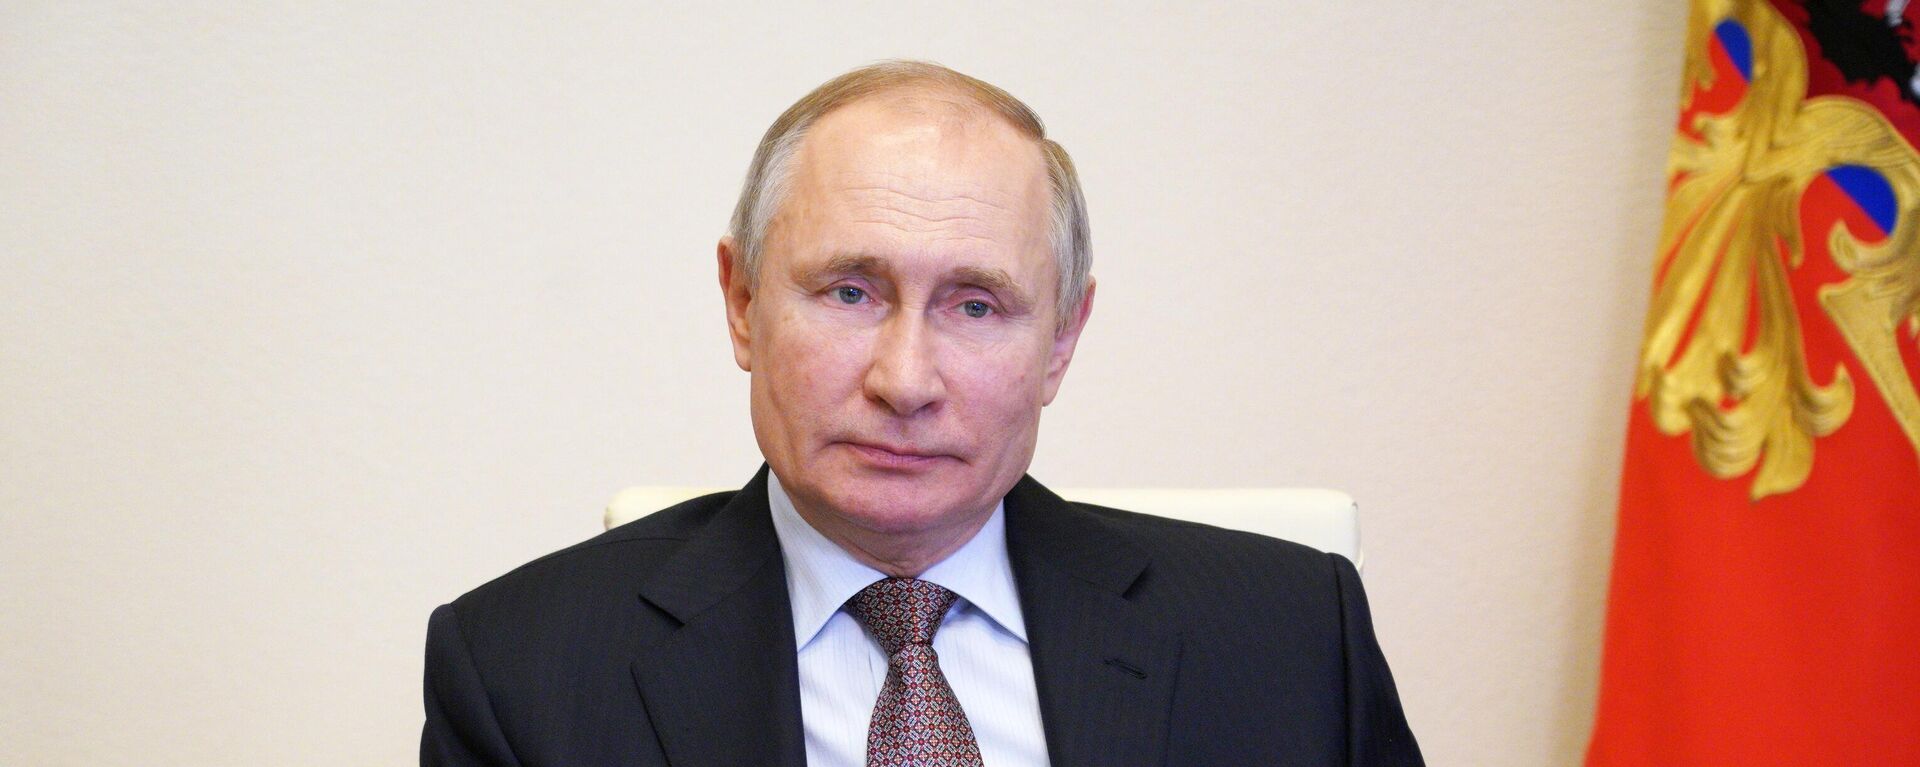 Vladímir Putin, presidente de Rusia - Sputnik Mundo, 1920, 23.04.2021